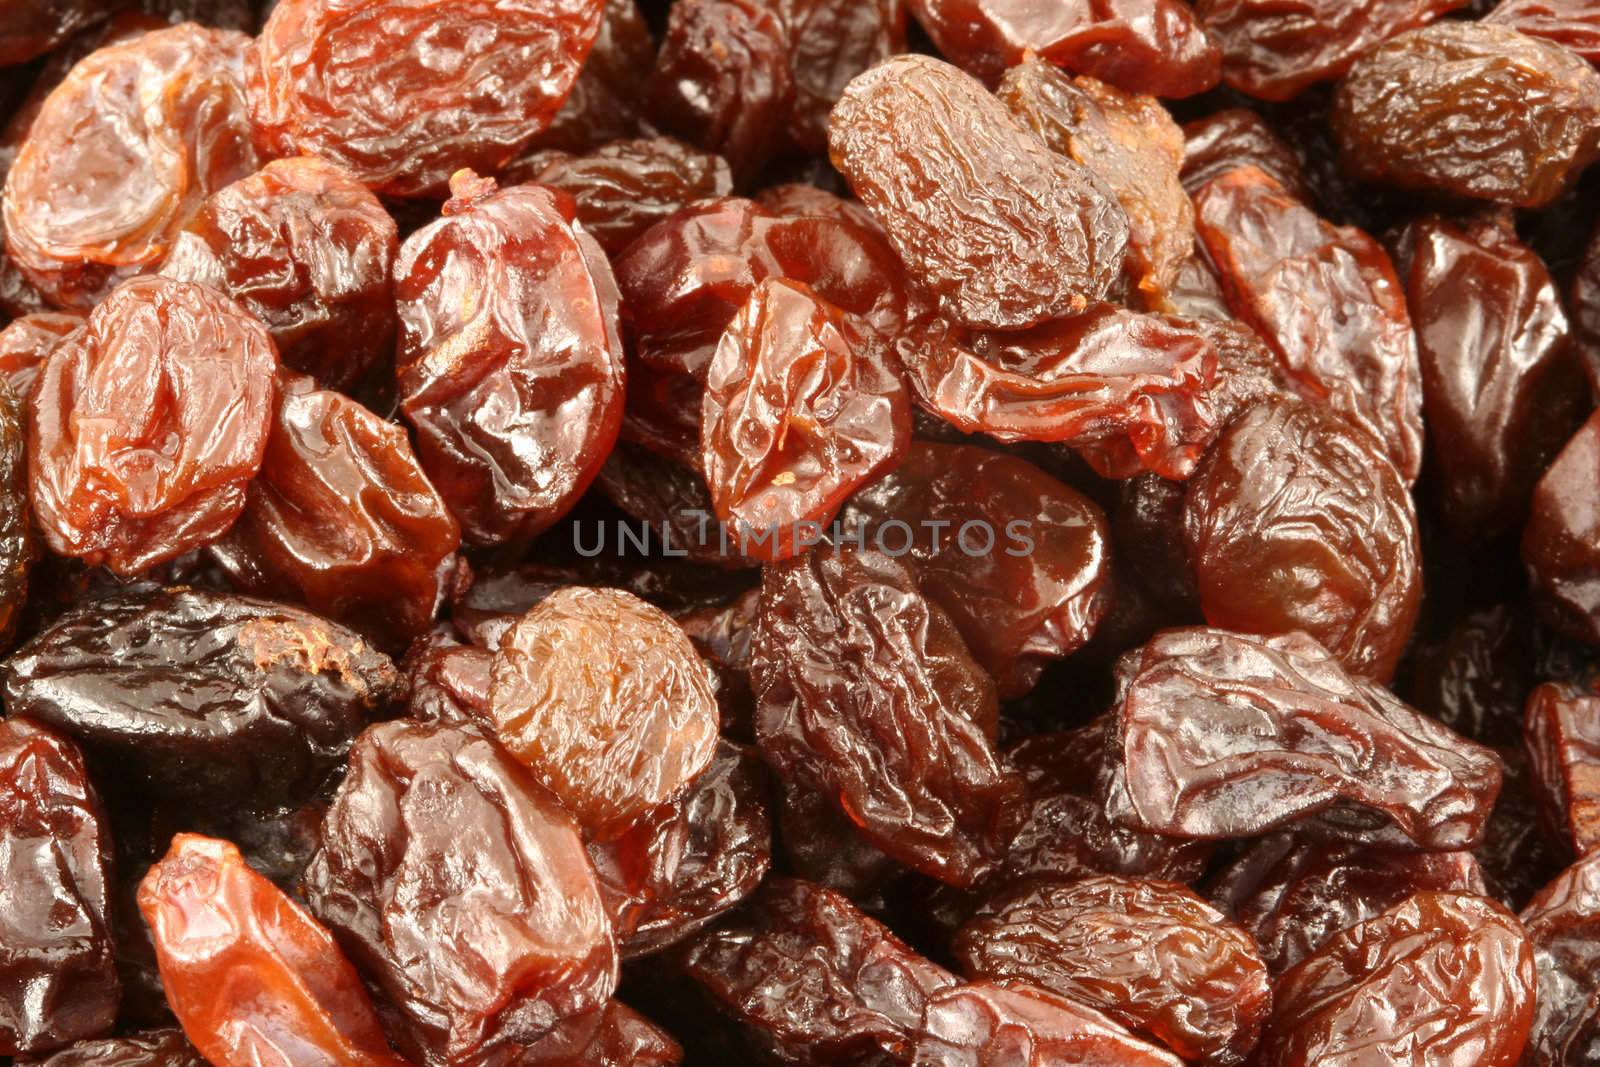 A raisins macro backround image